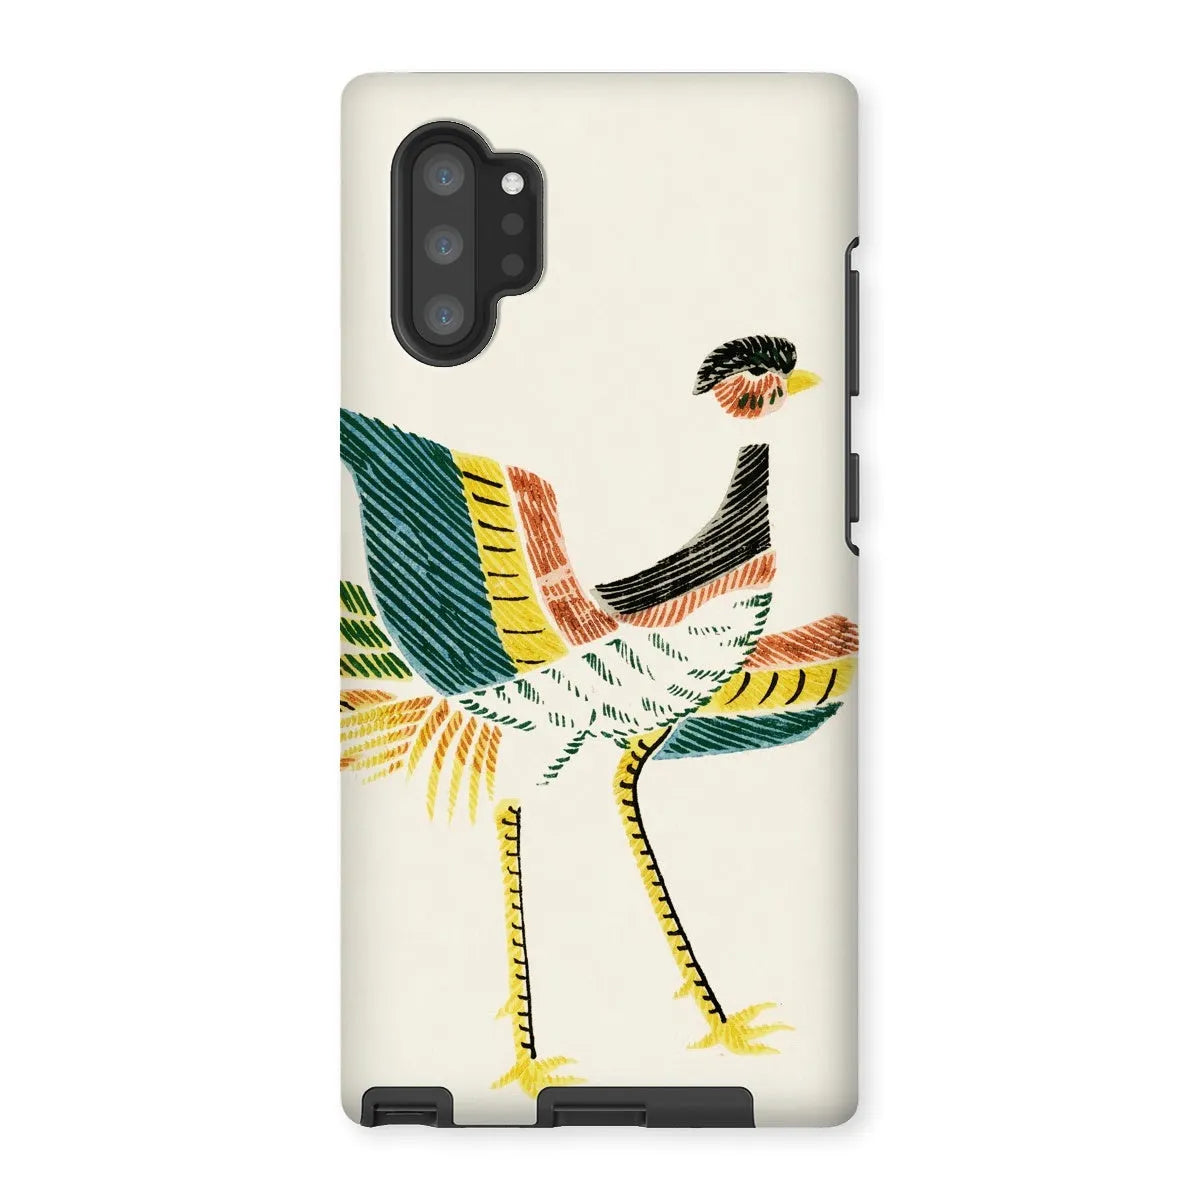 Woodblock Crane - Japanese Bird Phone Case - Taguchi Tomoki - Samsung Galaxy Note 10p / Matte - Mobile Phone Cases